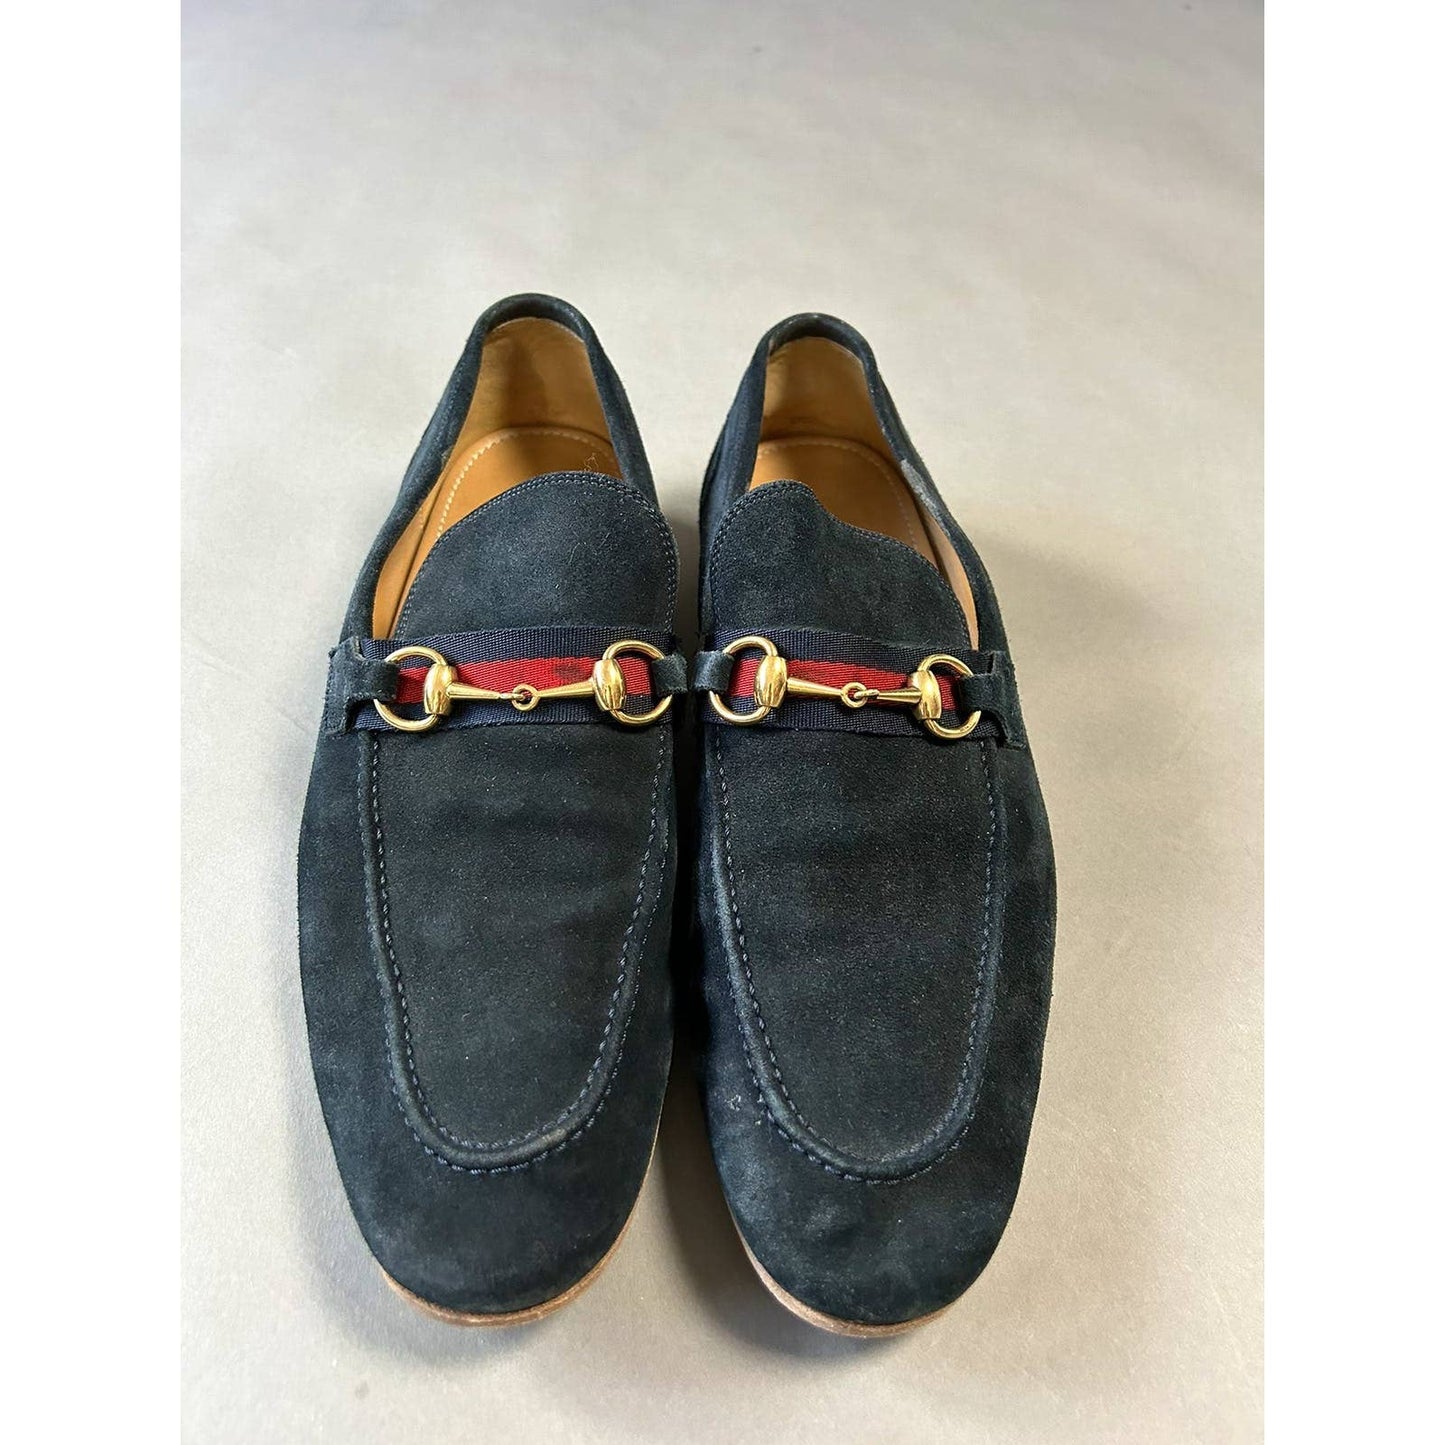 Gucci loafers horsebit black suede shoes low